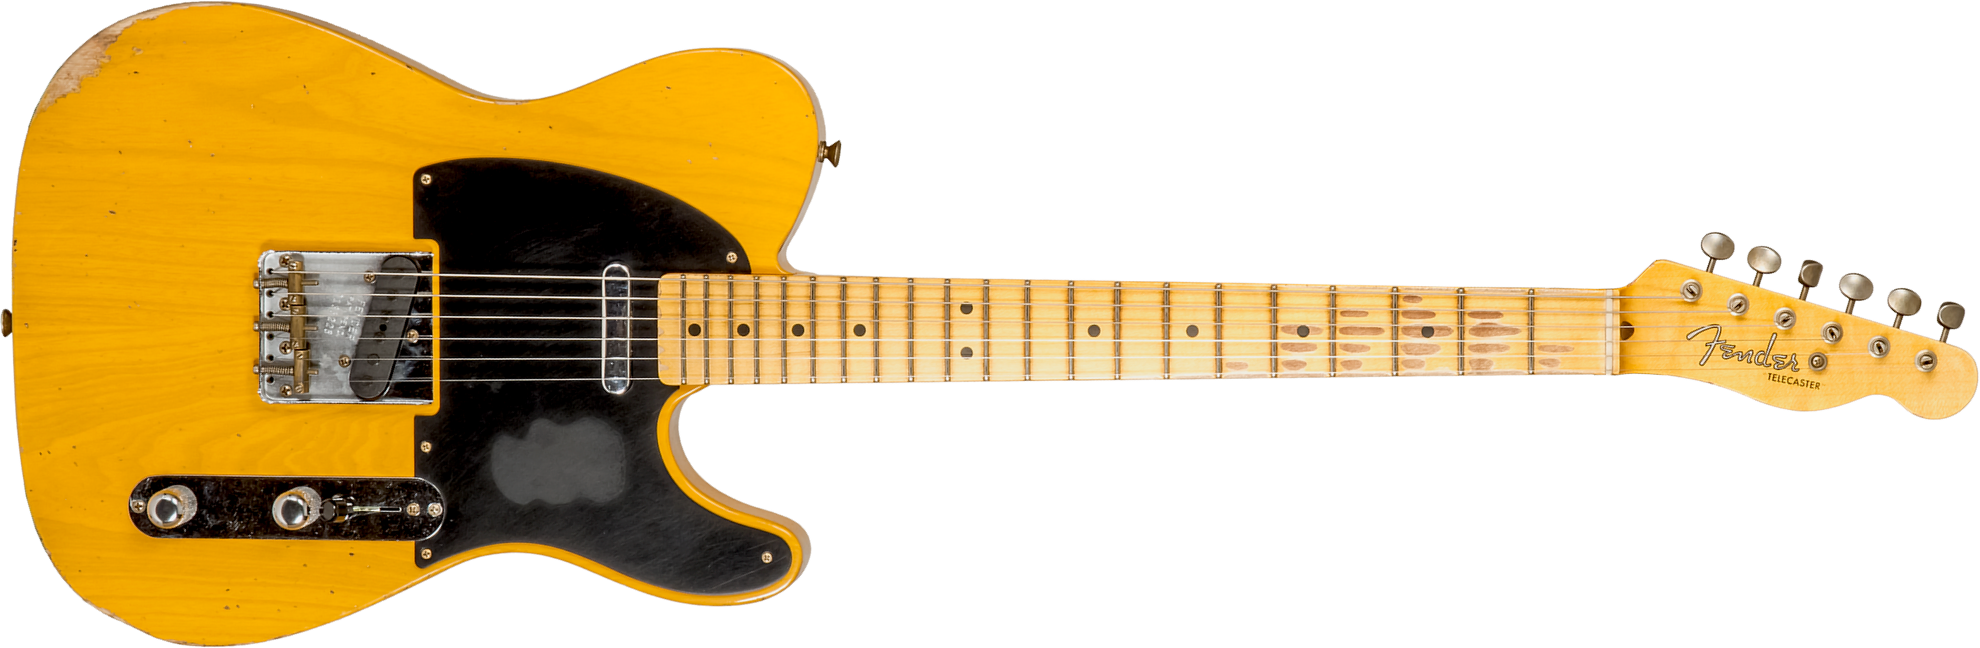 Fender Custom Shop Tele 1952 2s Ht Mn #r135225 - Relic Aged Buttercotch Blonde - Guitarra eléctrica con forma de tel - Main picture